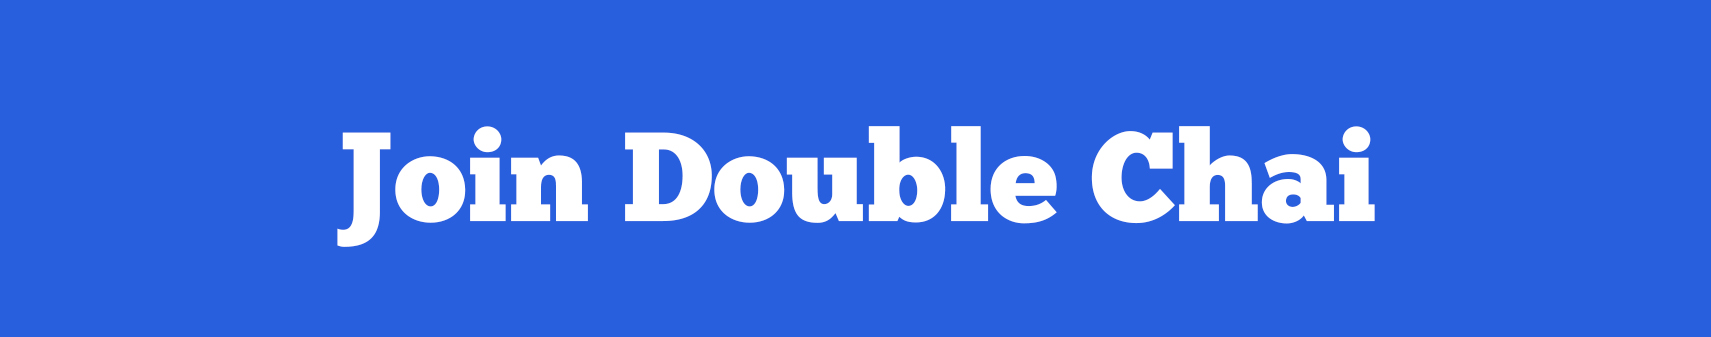 Join Double Chai.jpg